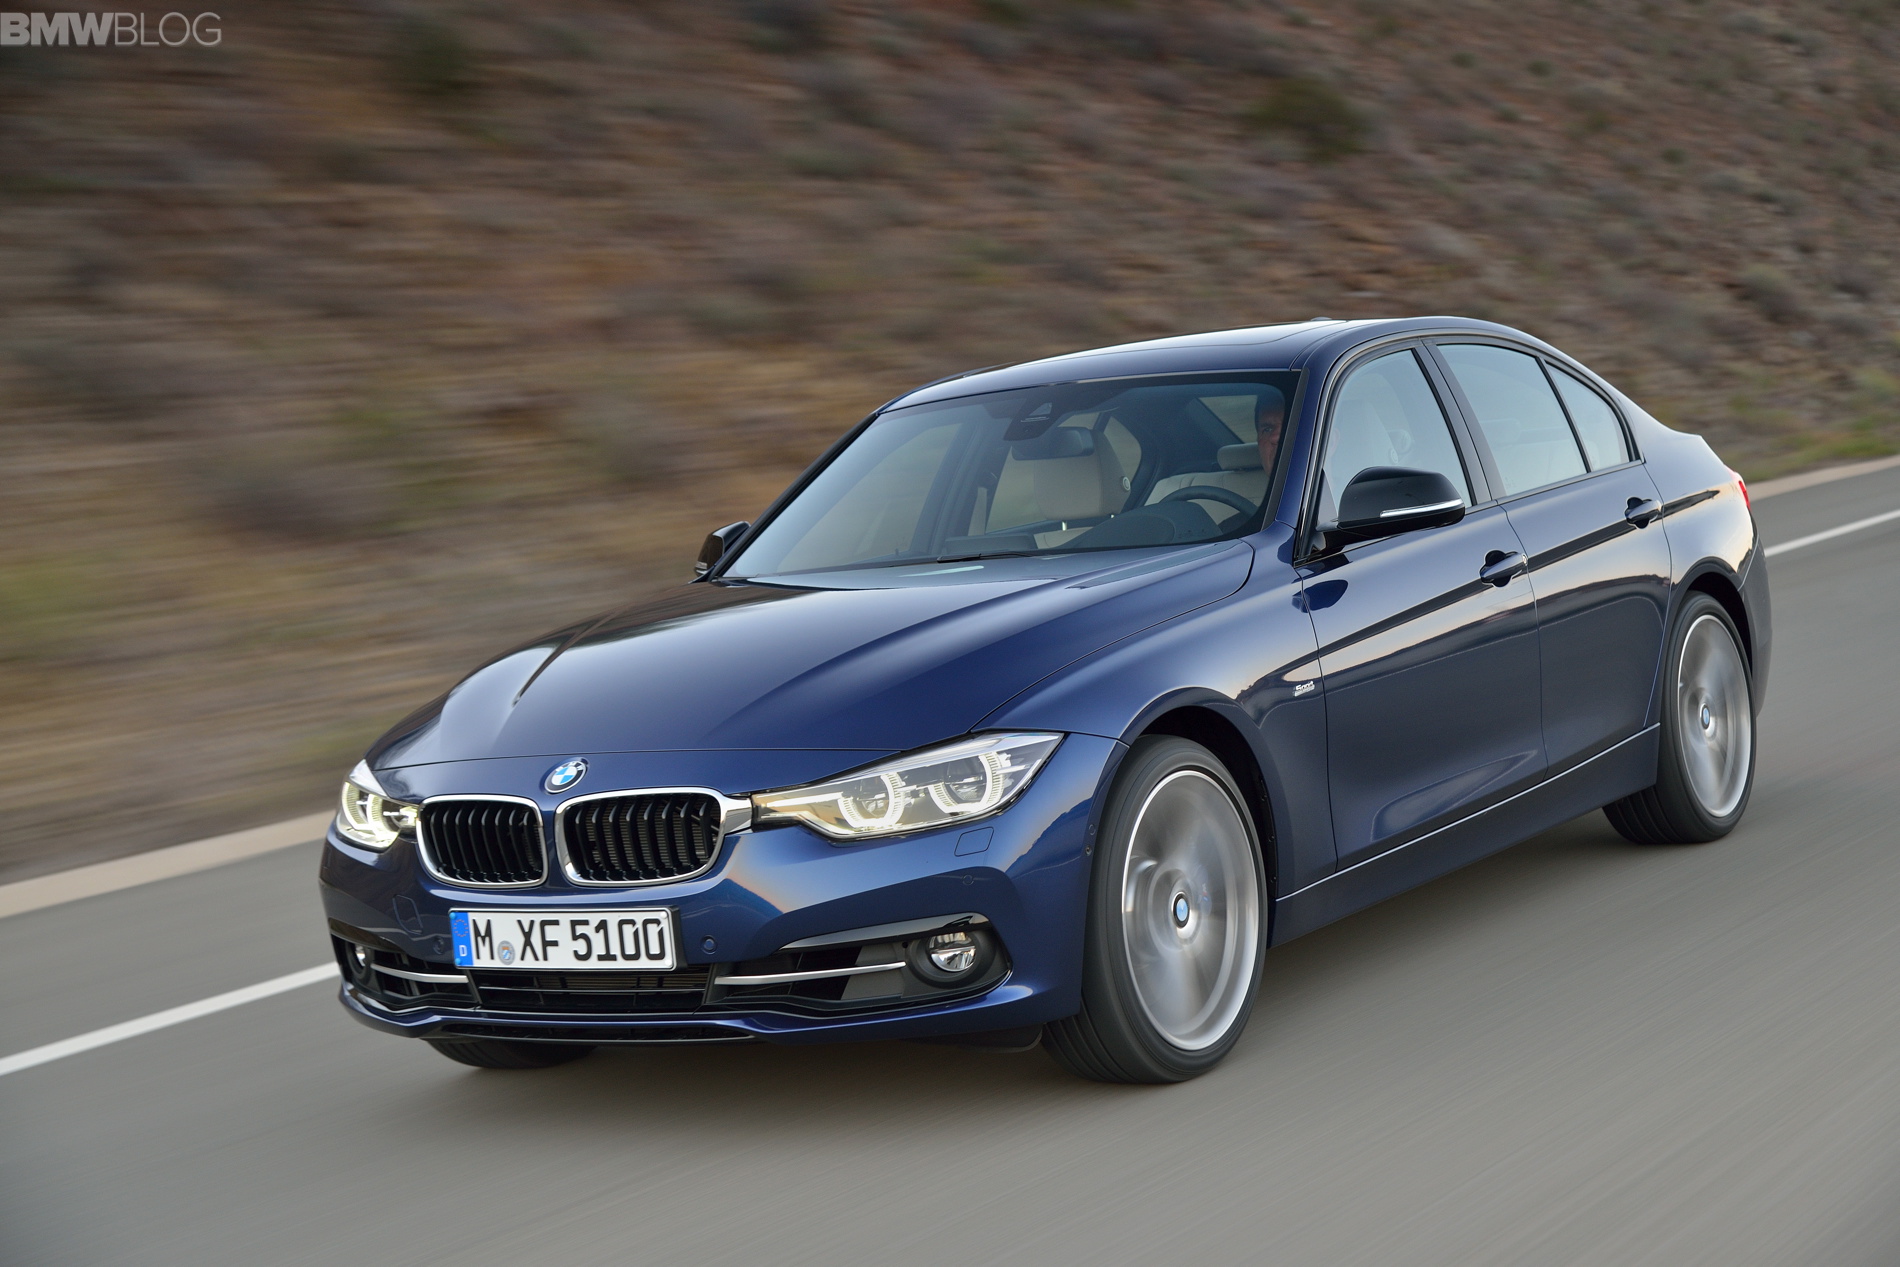 2015 BMW 3 Series Sedan and Touring - Videos